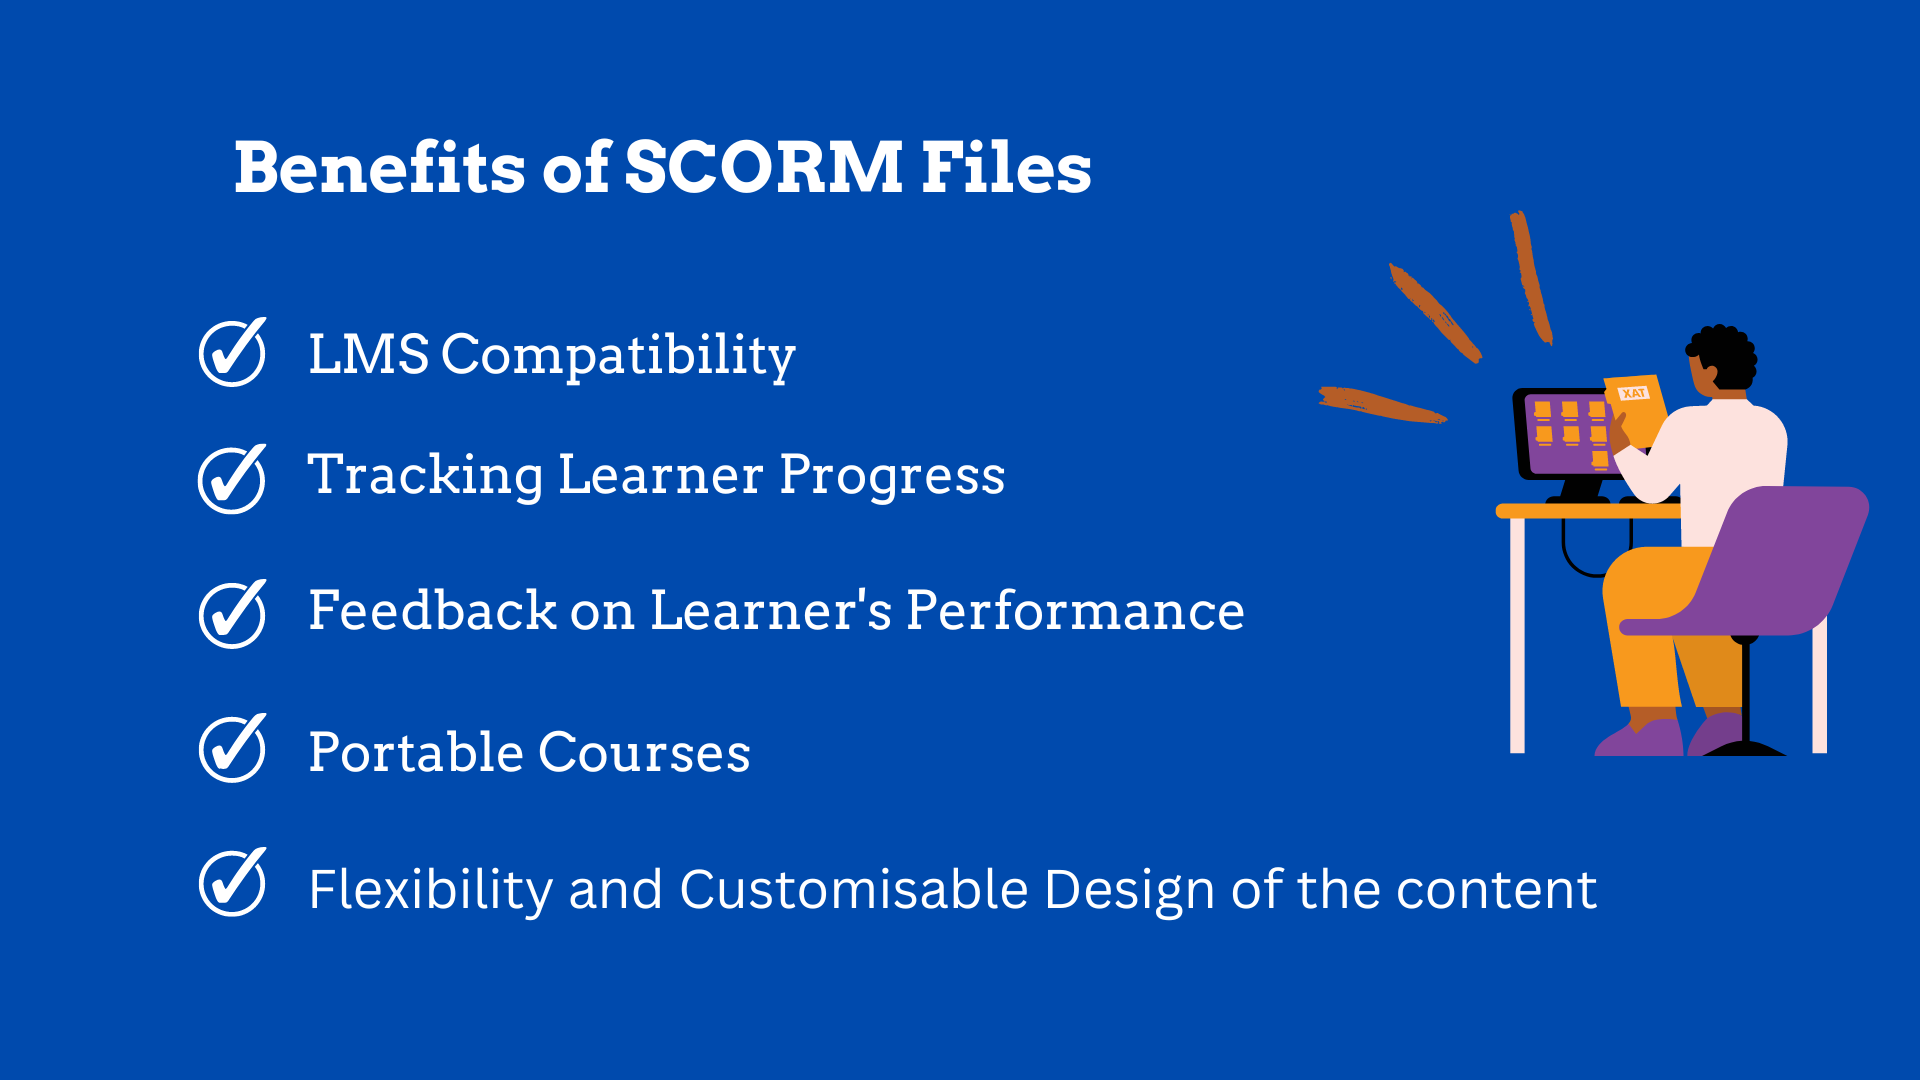 Benefits of SCORM files for RTOs